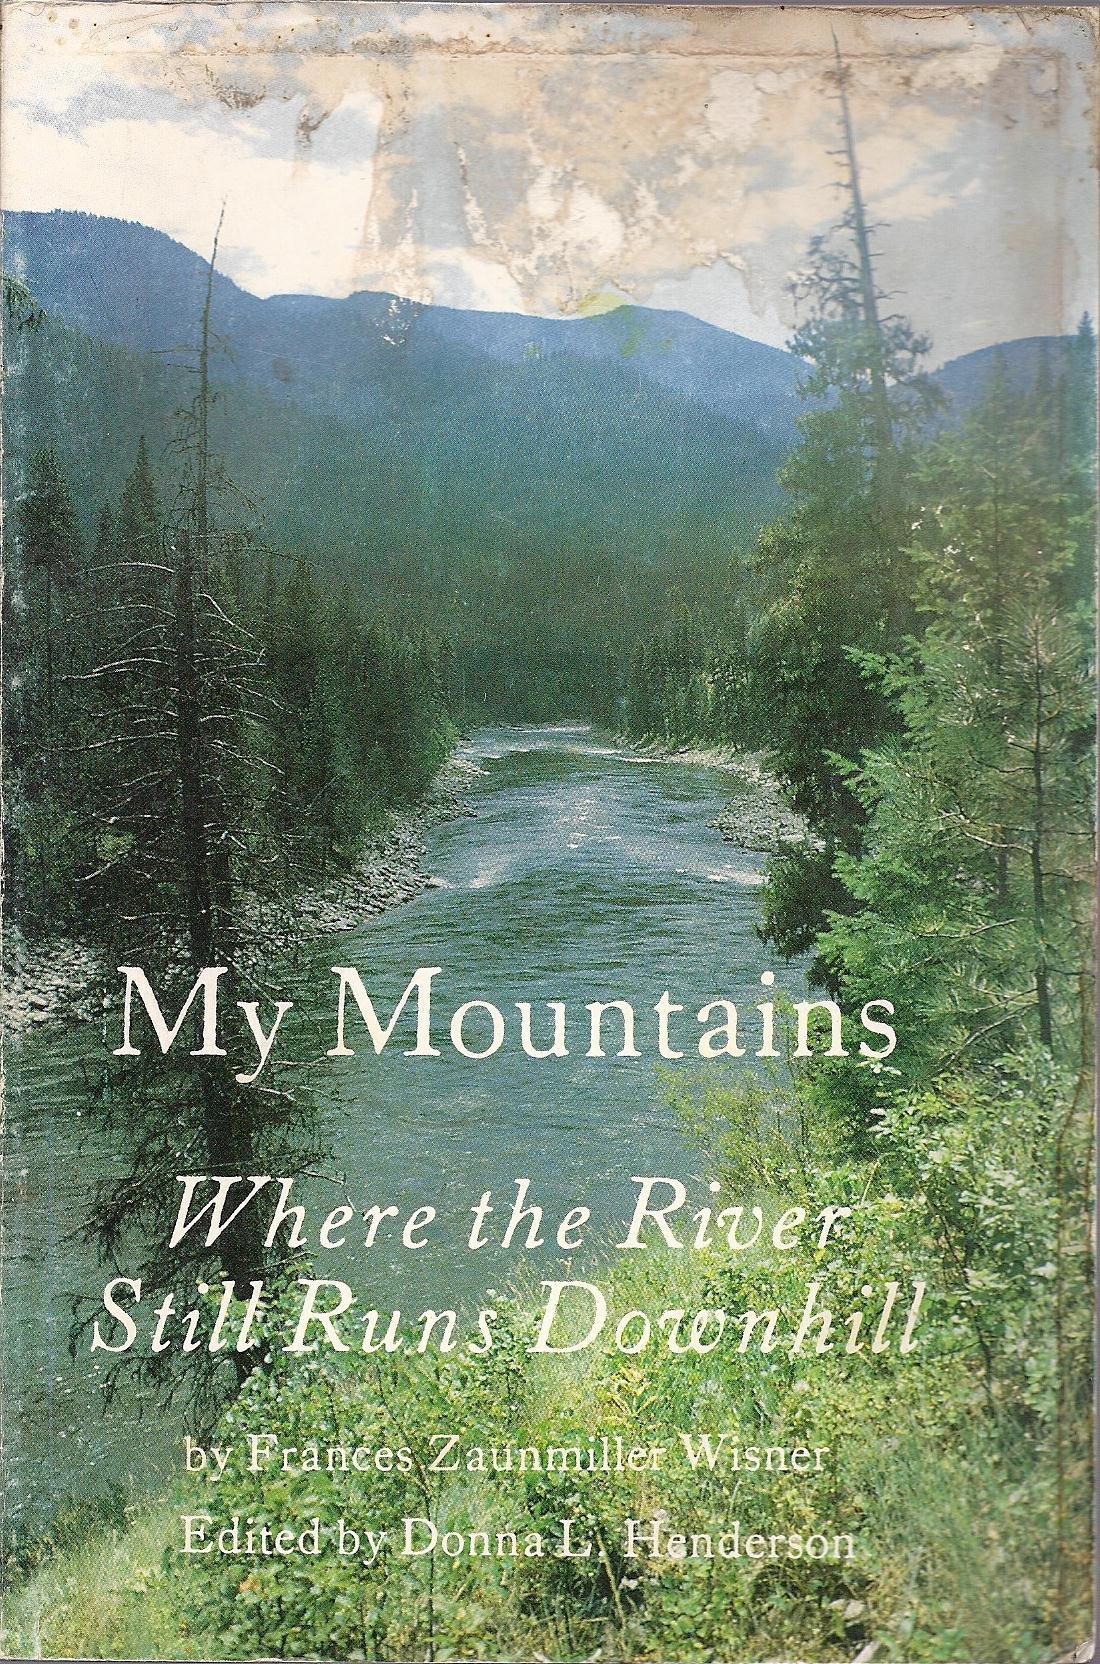 My mountains: Where the river still runs downhill (book cover)